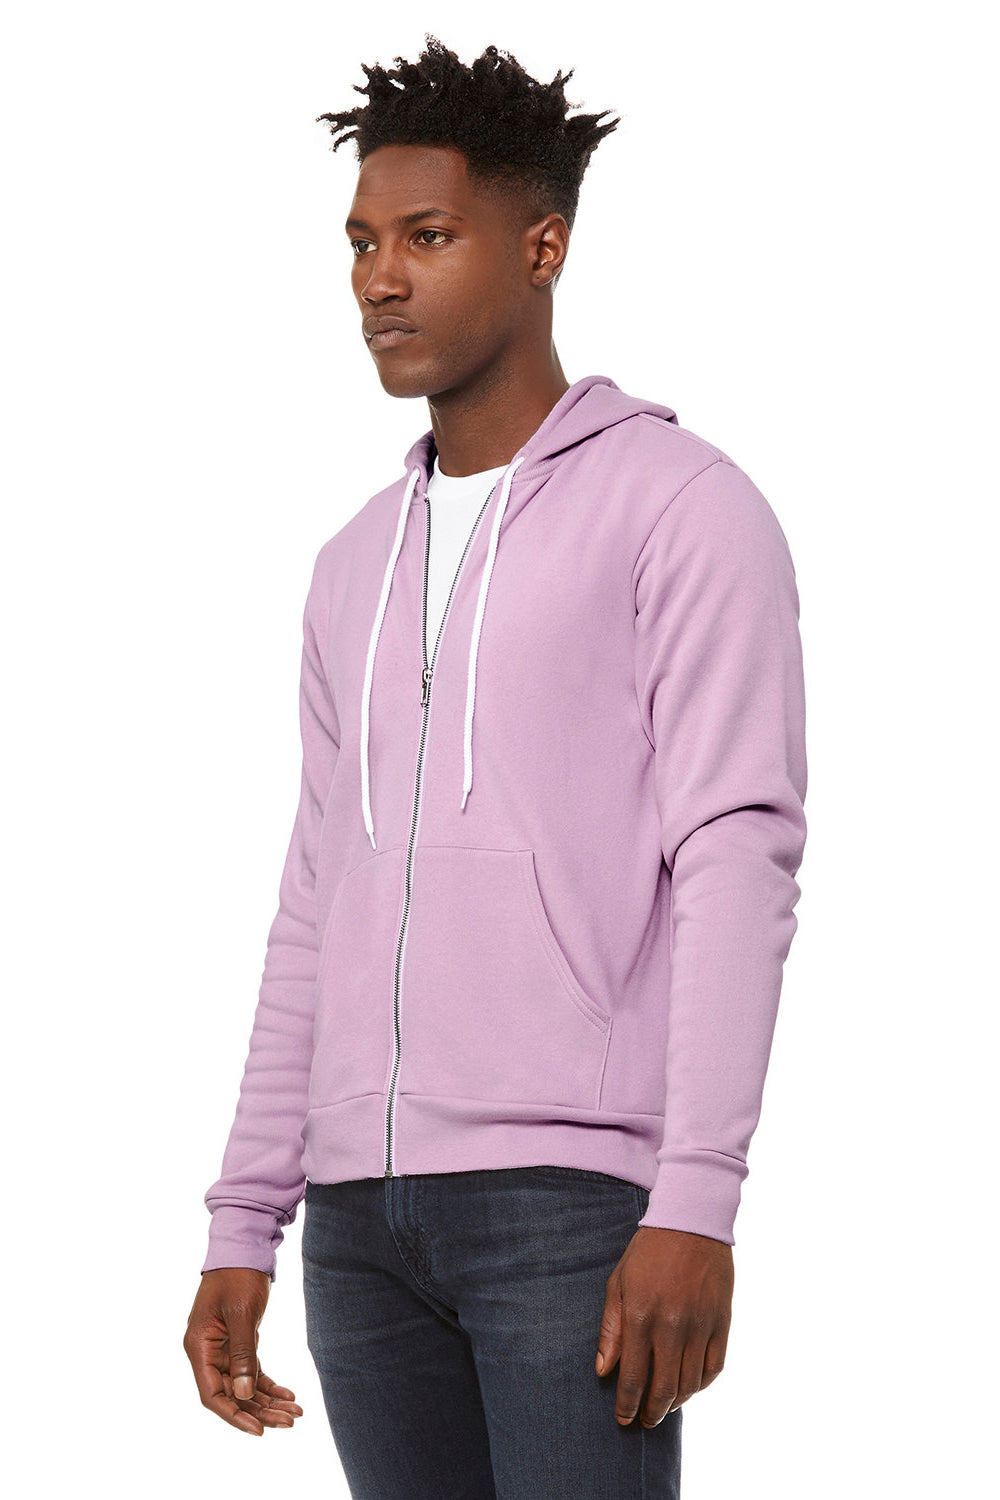 Bella + Canvas BC3739/3739 Mens Fleece Full Zip Hooded Sweatshirt Hoodie Lilac Model 3Q